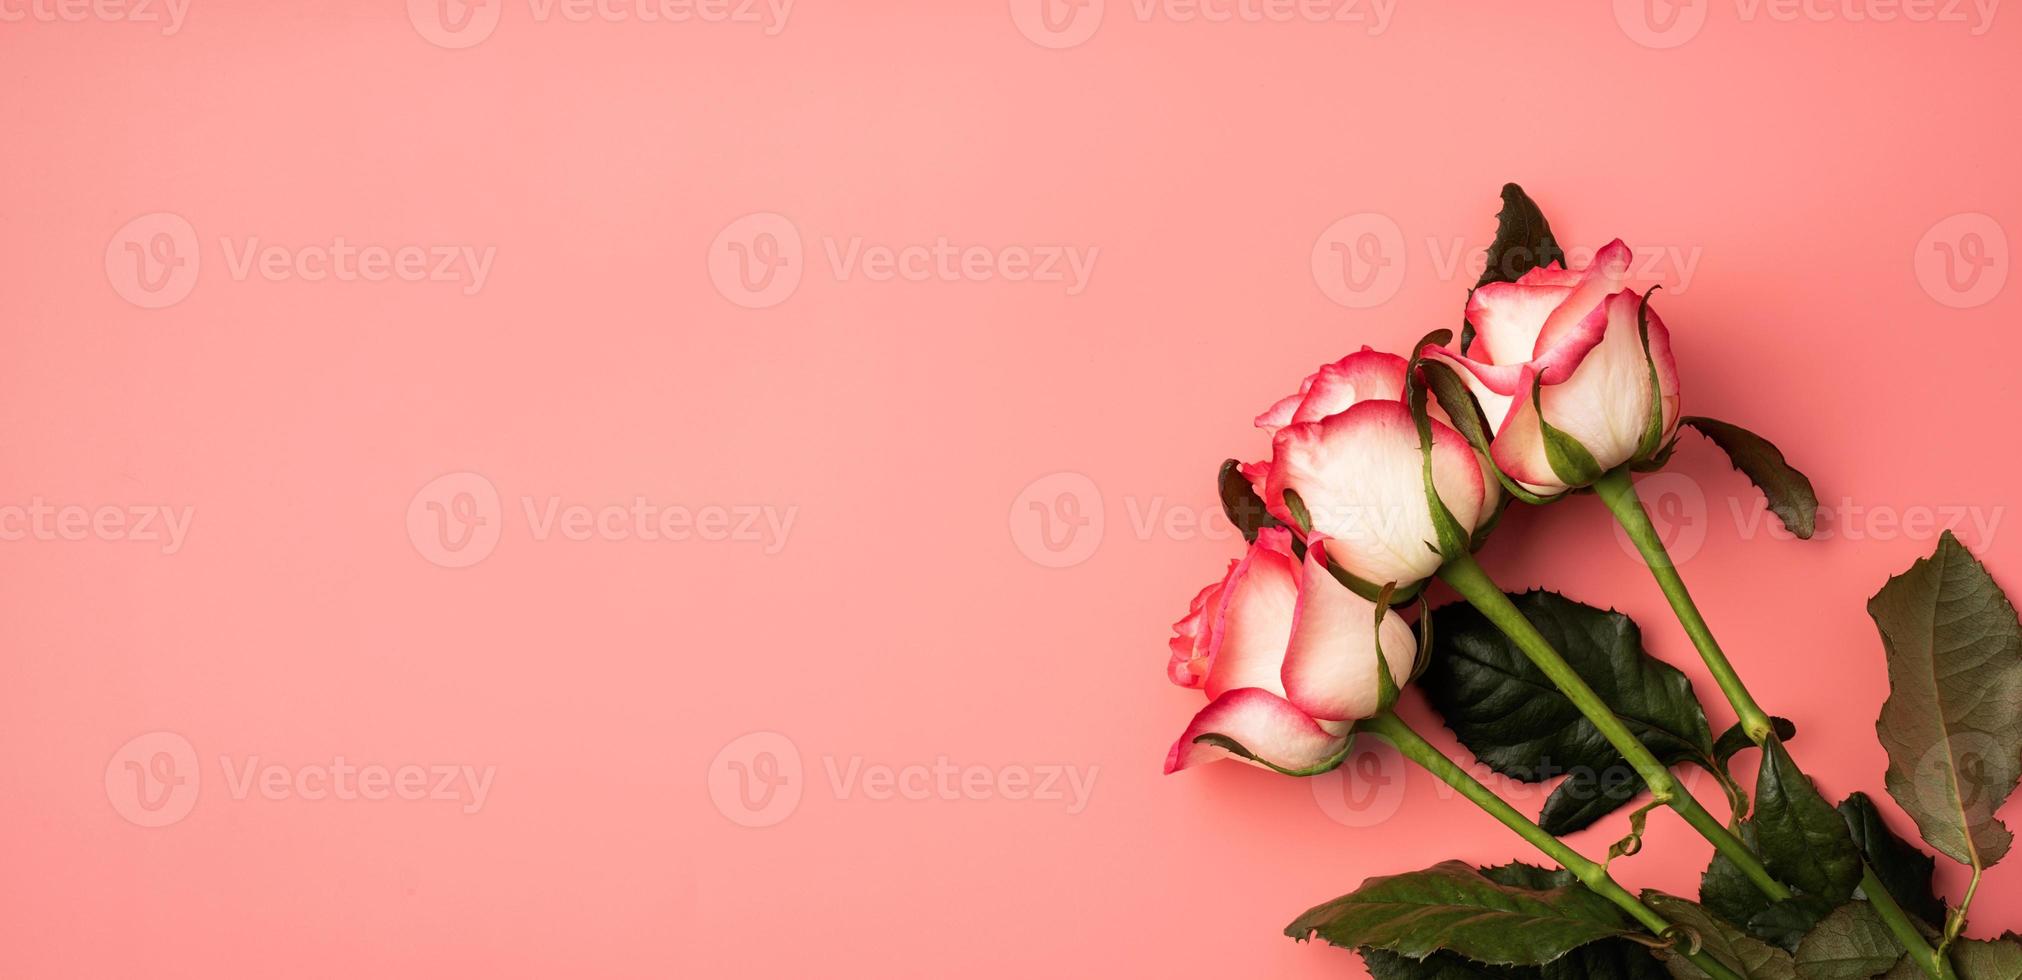 rosa Rosen auf festem rosa Hintergrund foto